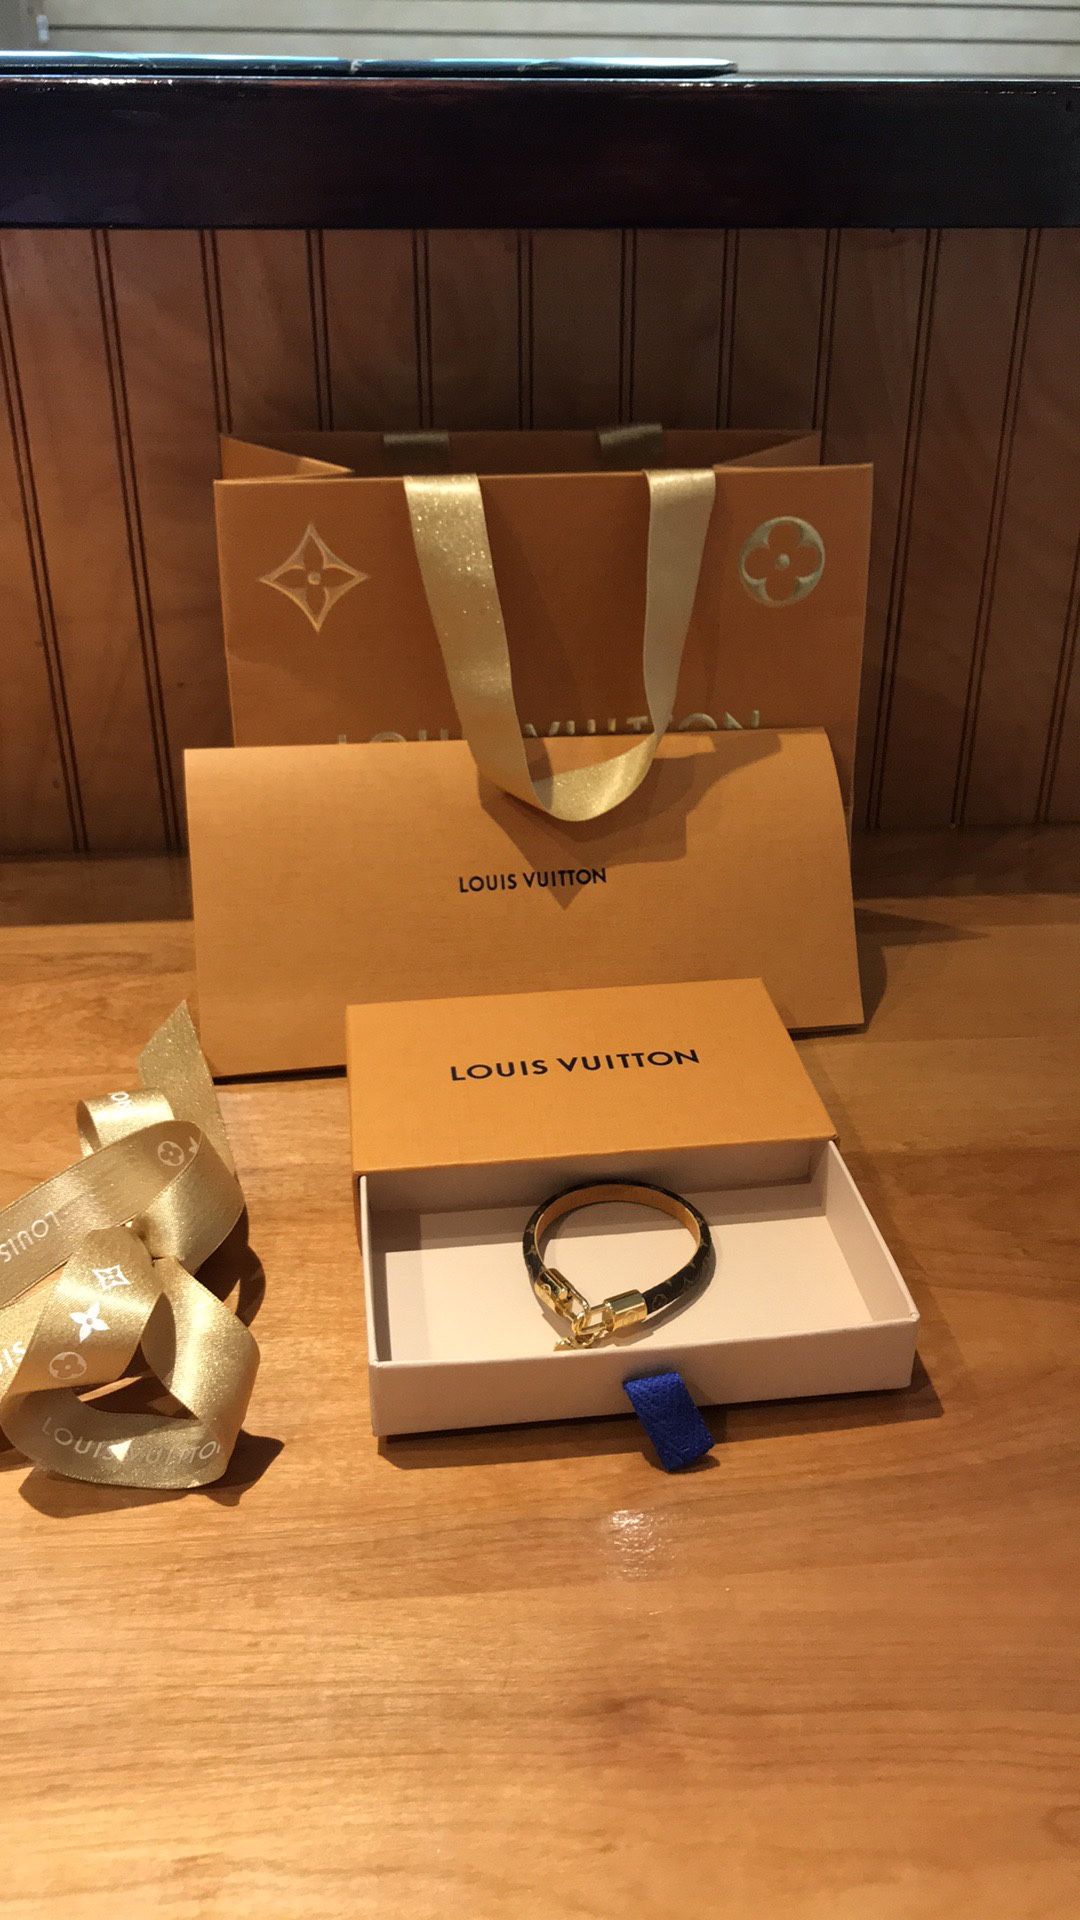 LOUIS VUITTON Alma bracelet- brand new never worn!